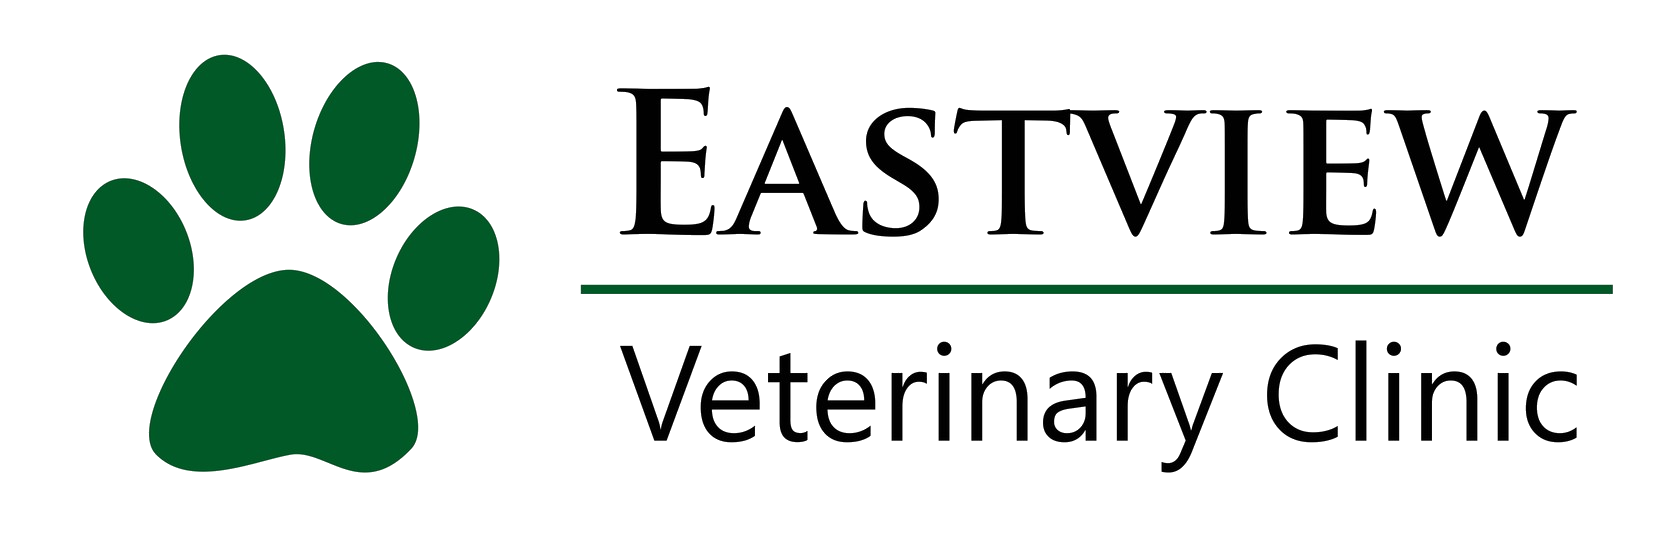 Eastview Veterinary Clinic logo